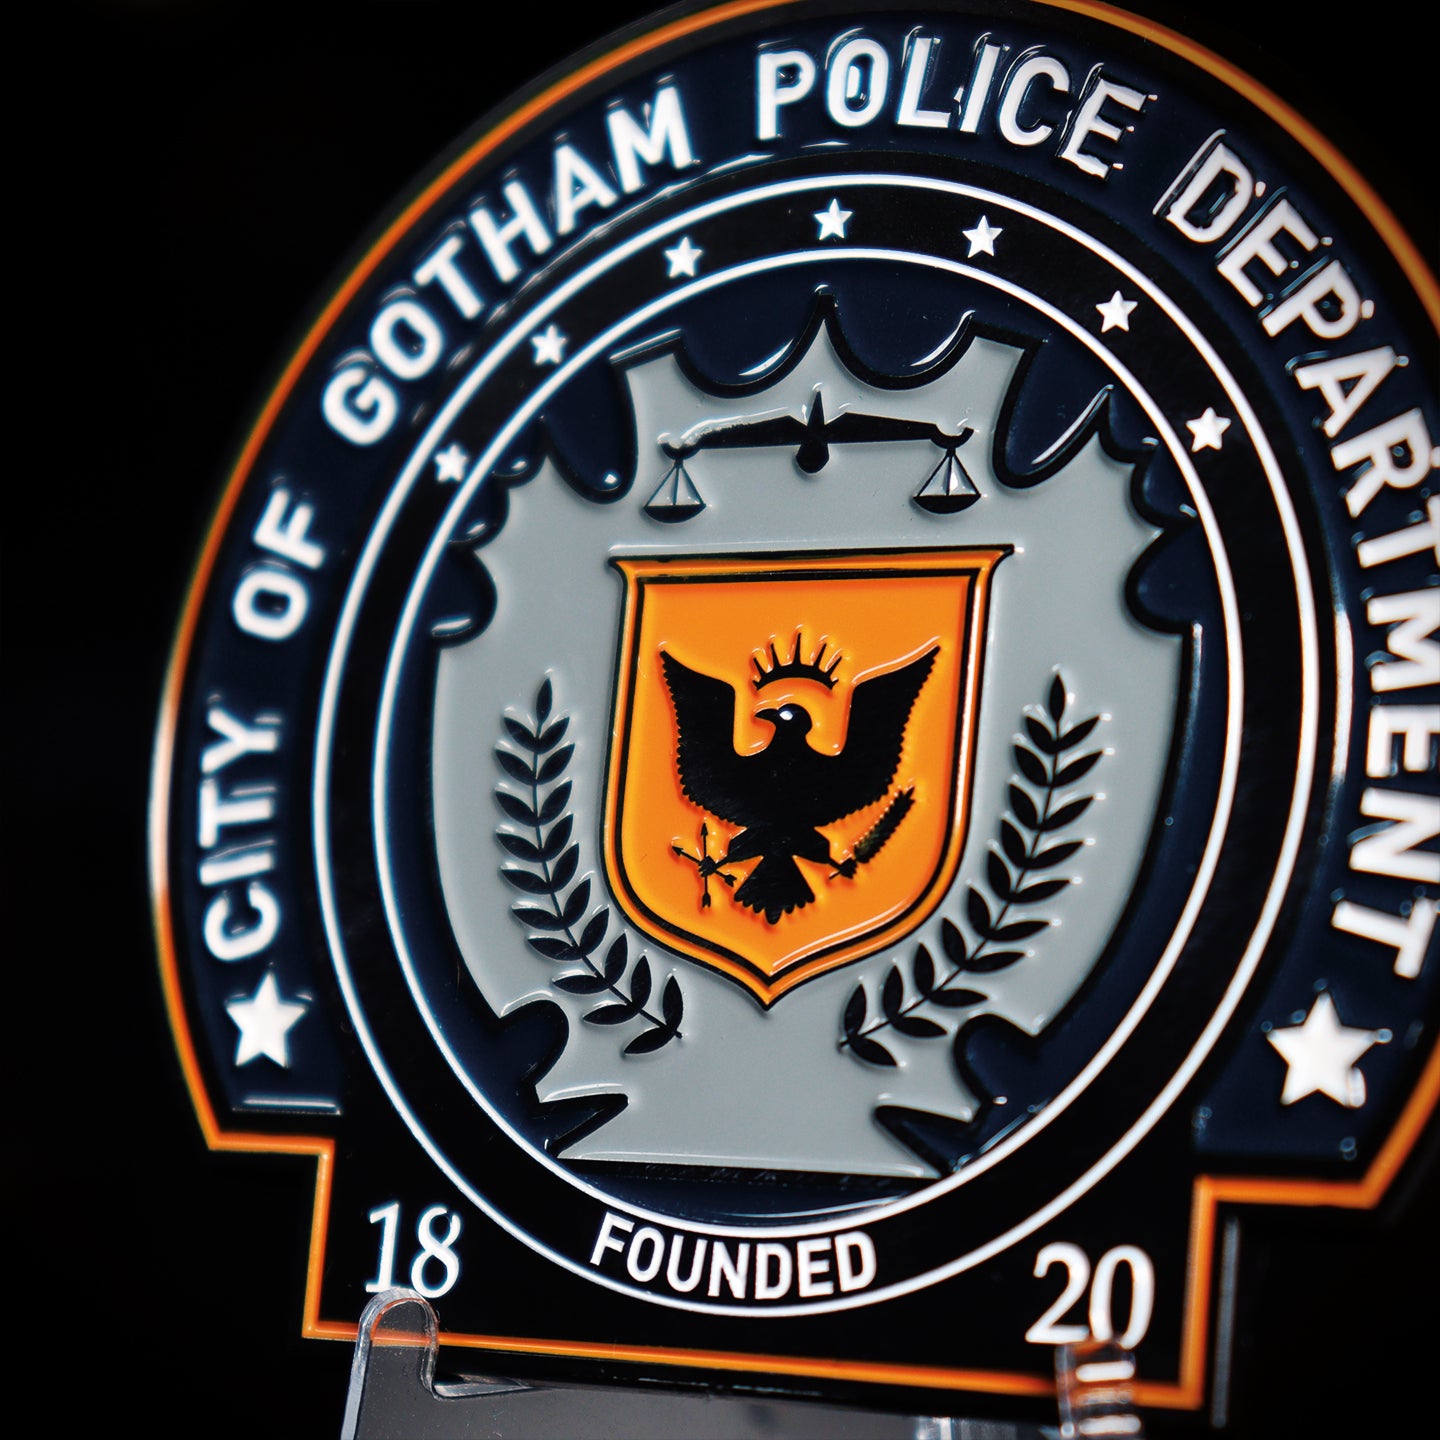 DC The Dark Knight Limited Edition Gotham City Police Badge Medallion